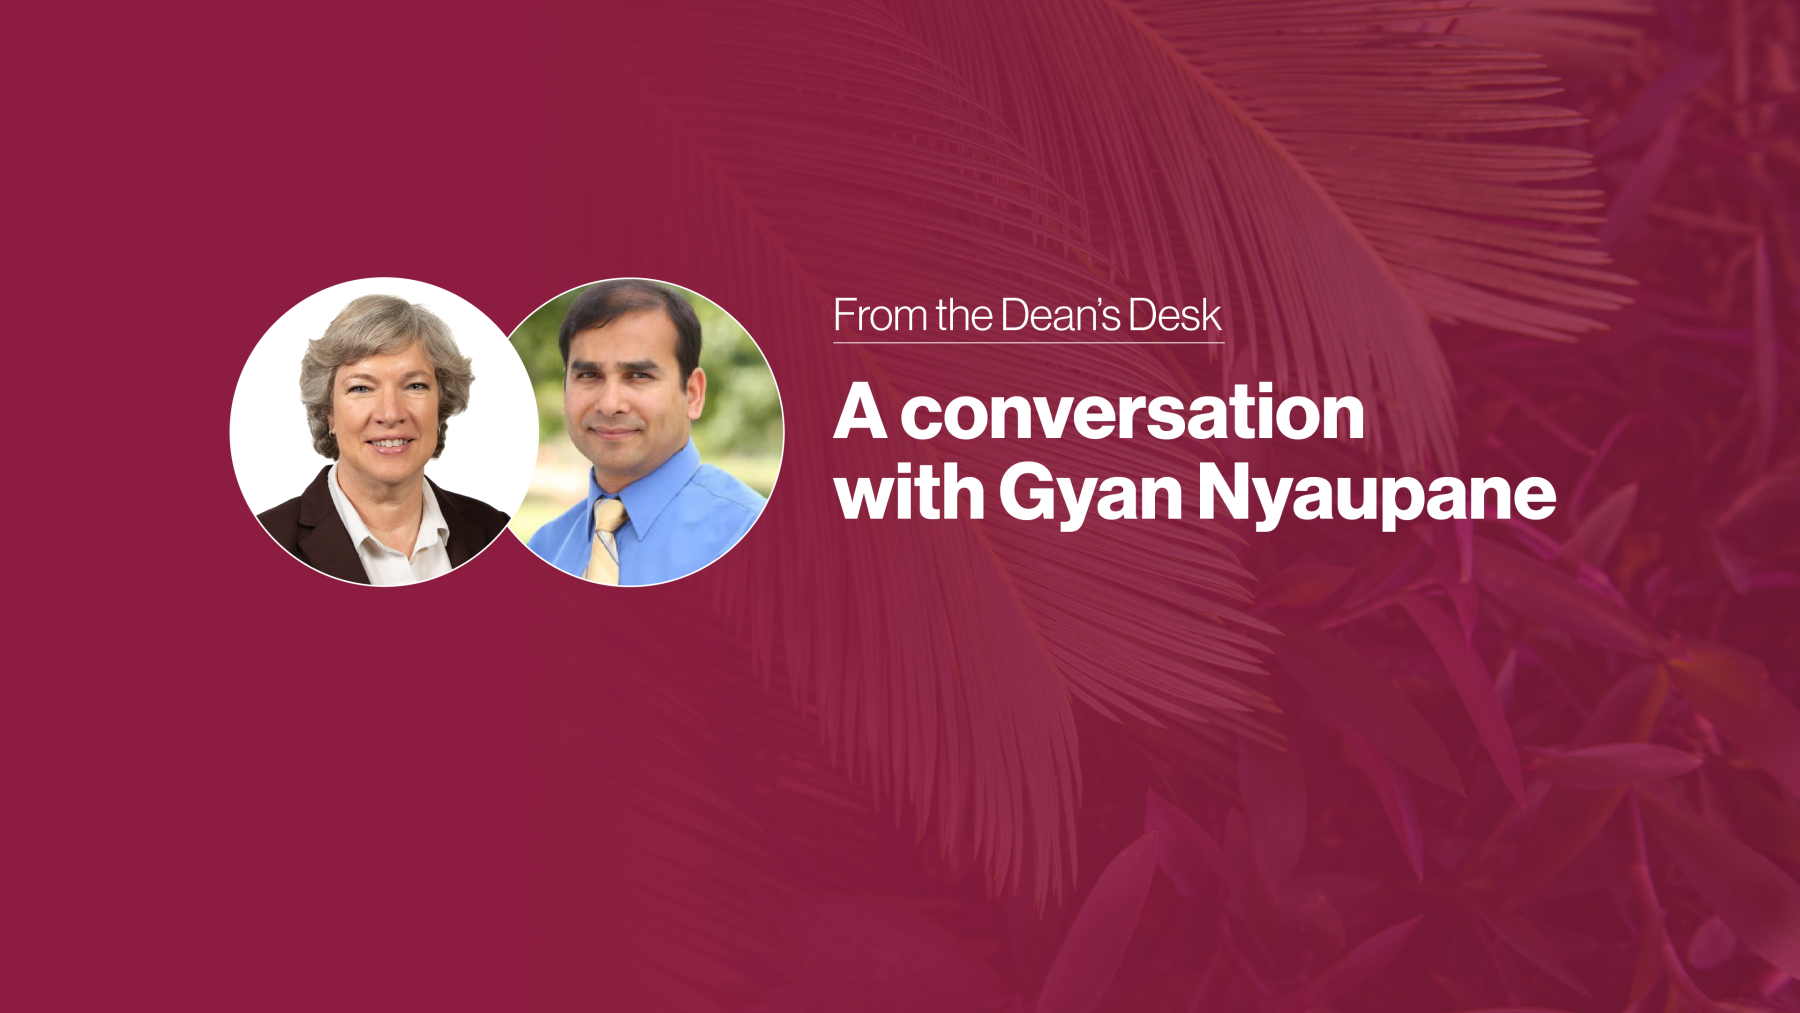 A conversation with Gyan Nyaupane